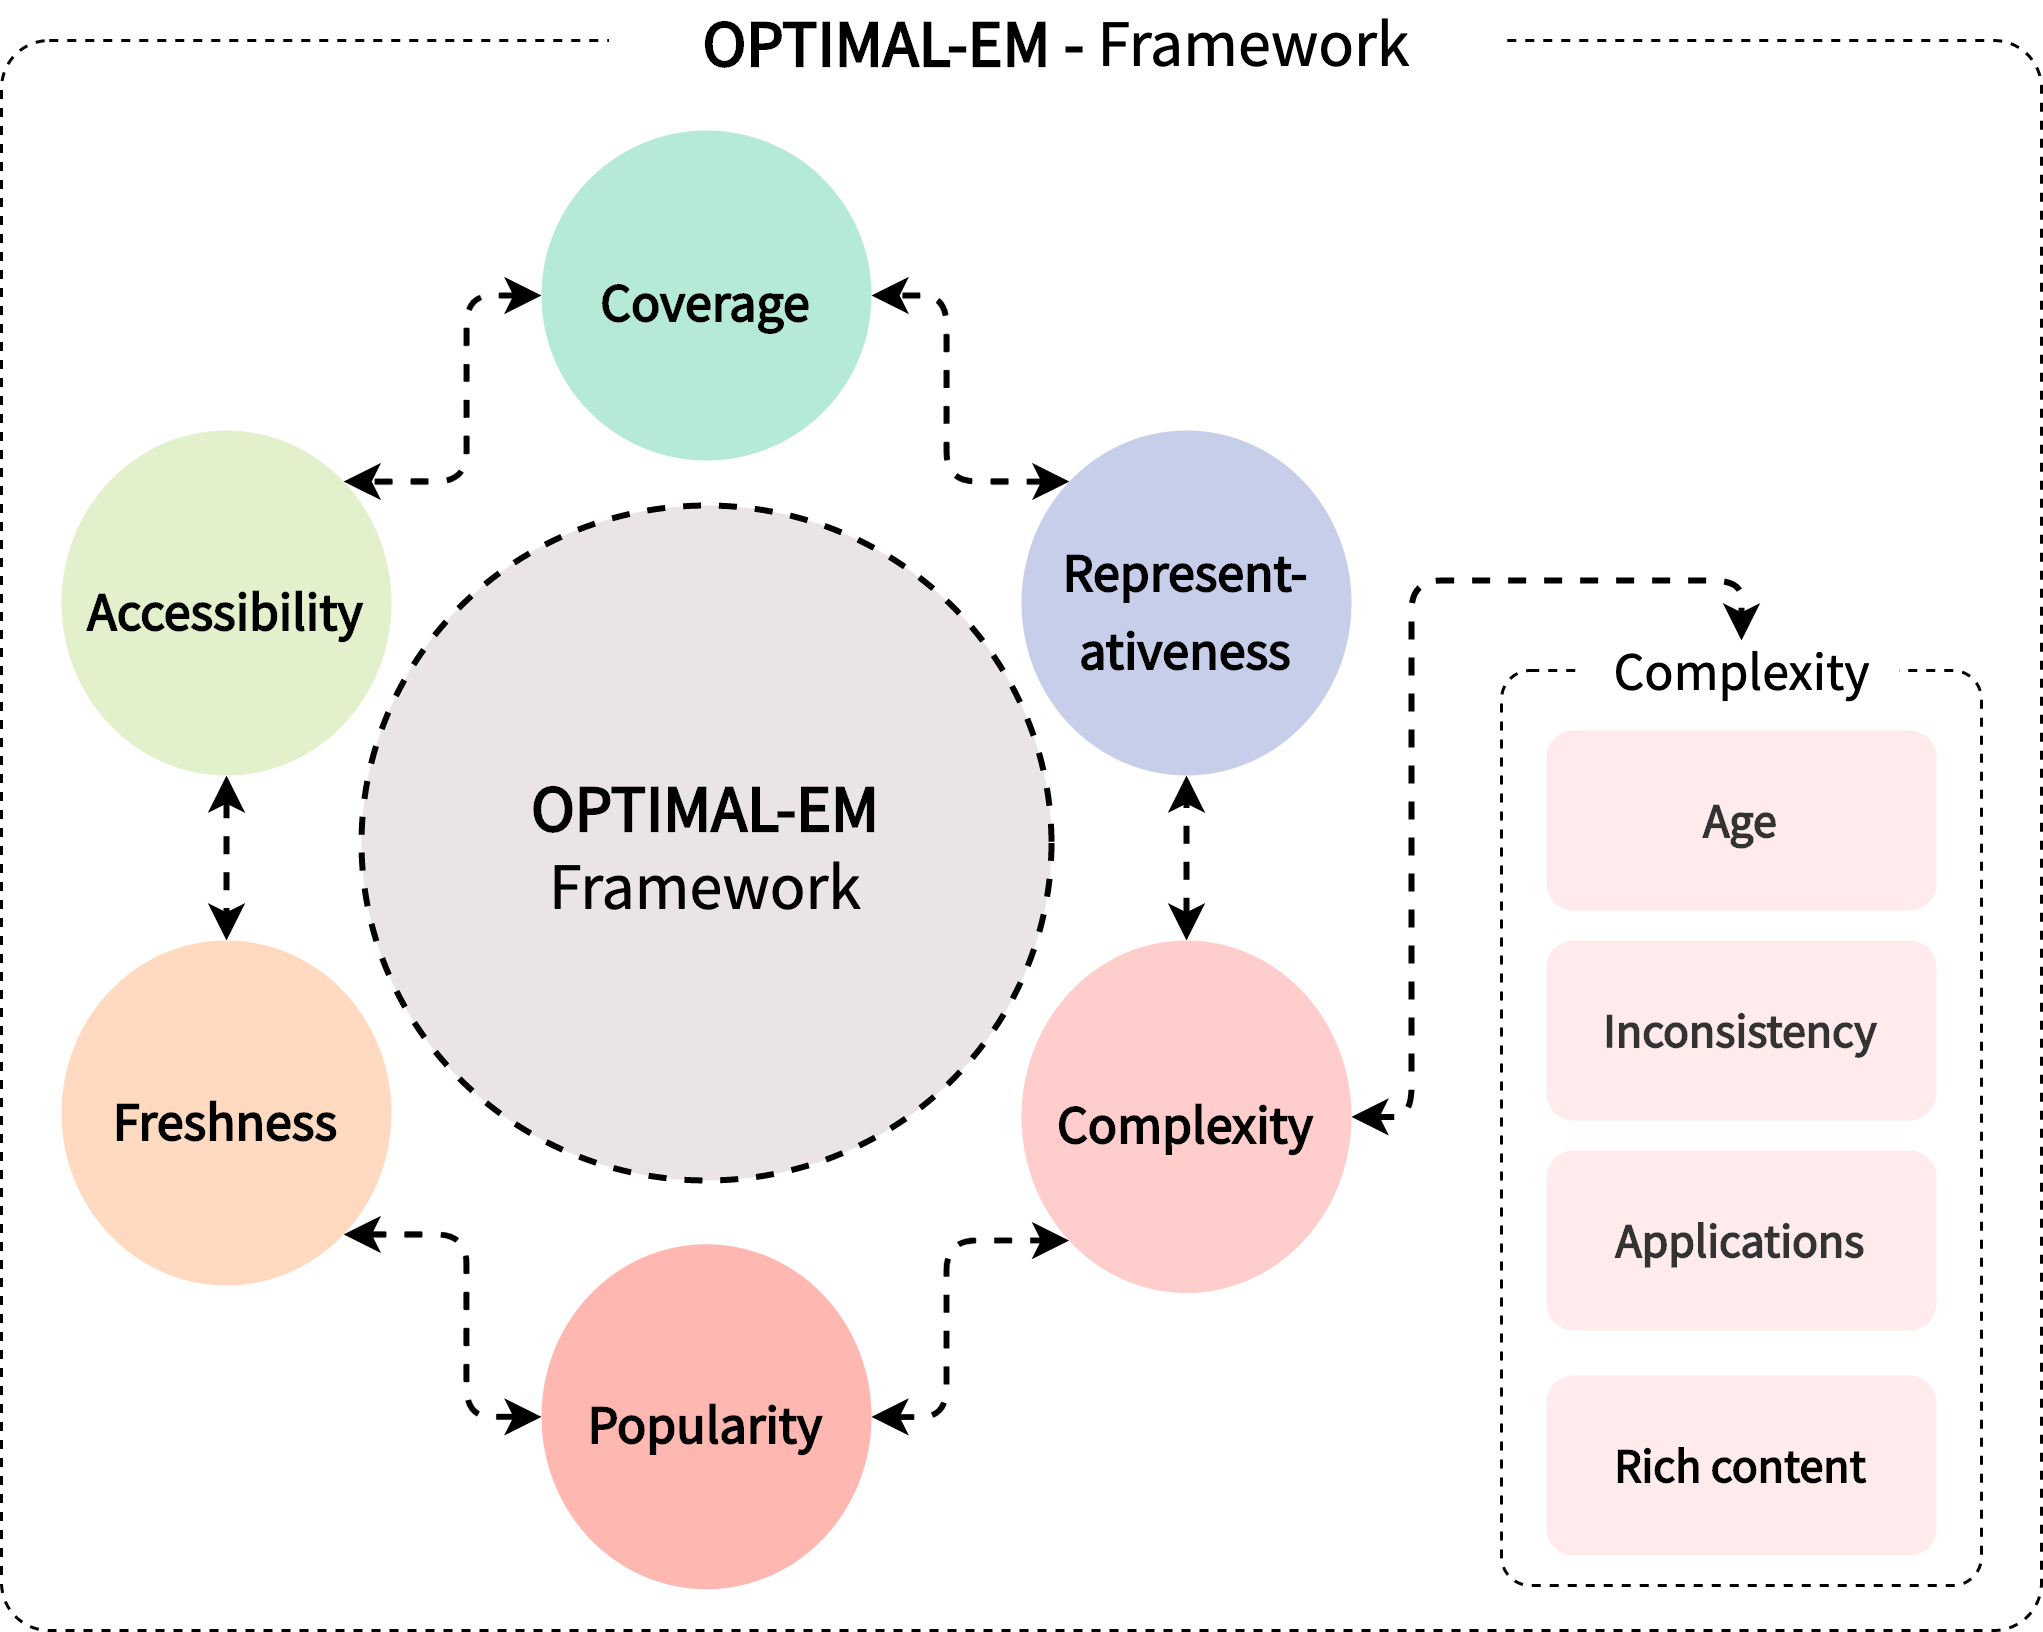 Picture: A diagram of the OPTIMAL-EM framework.